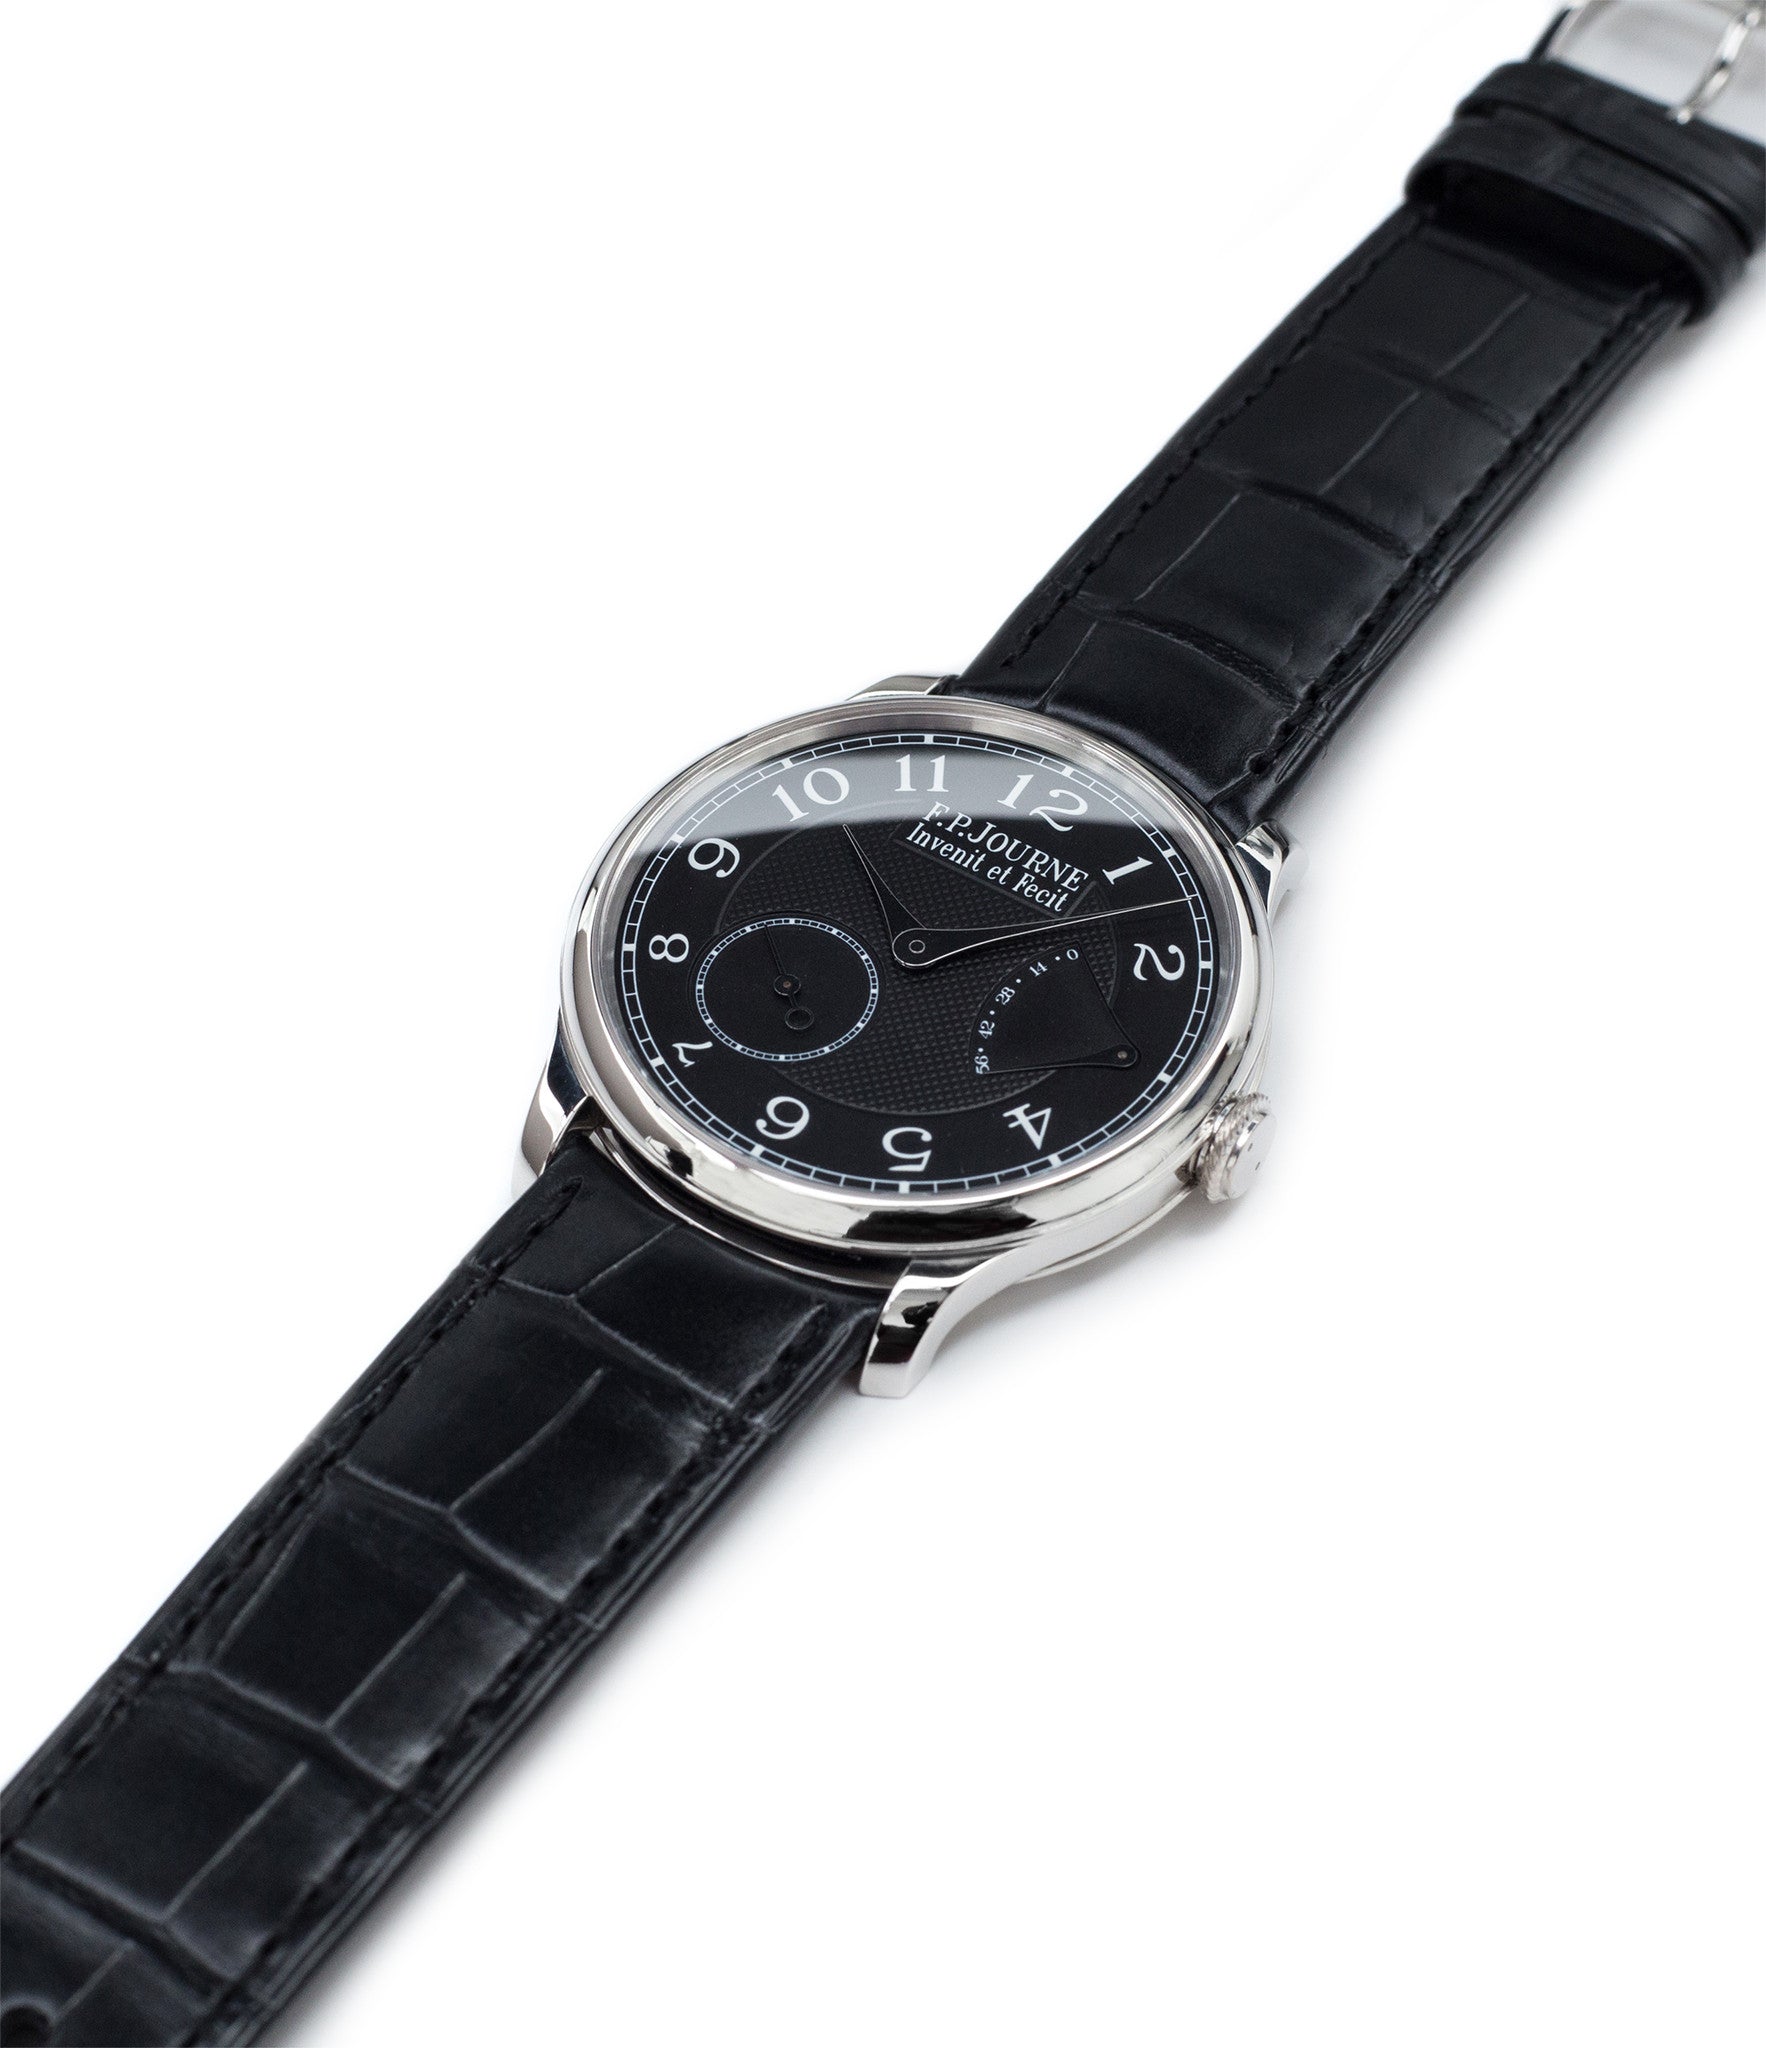 buy black dial dress watch F. P. Journe Chronometre Souverain Black label platinum 38 mm watch online at A Collected Man